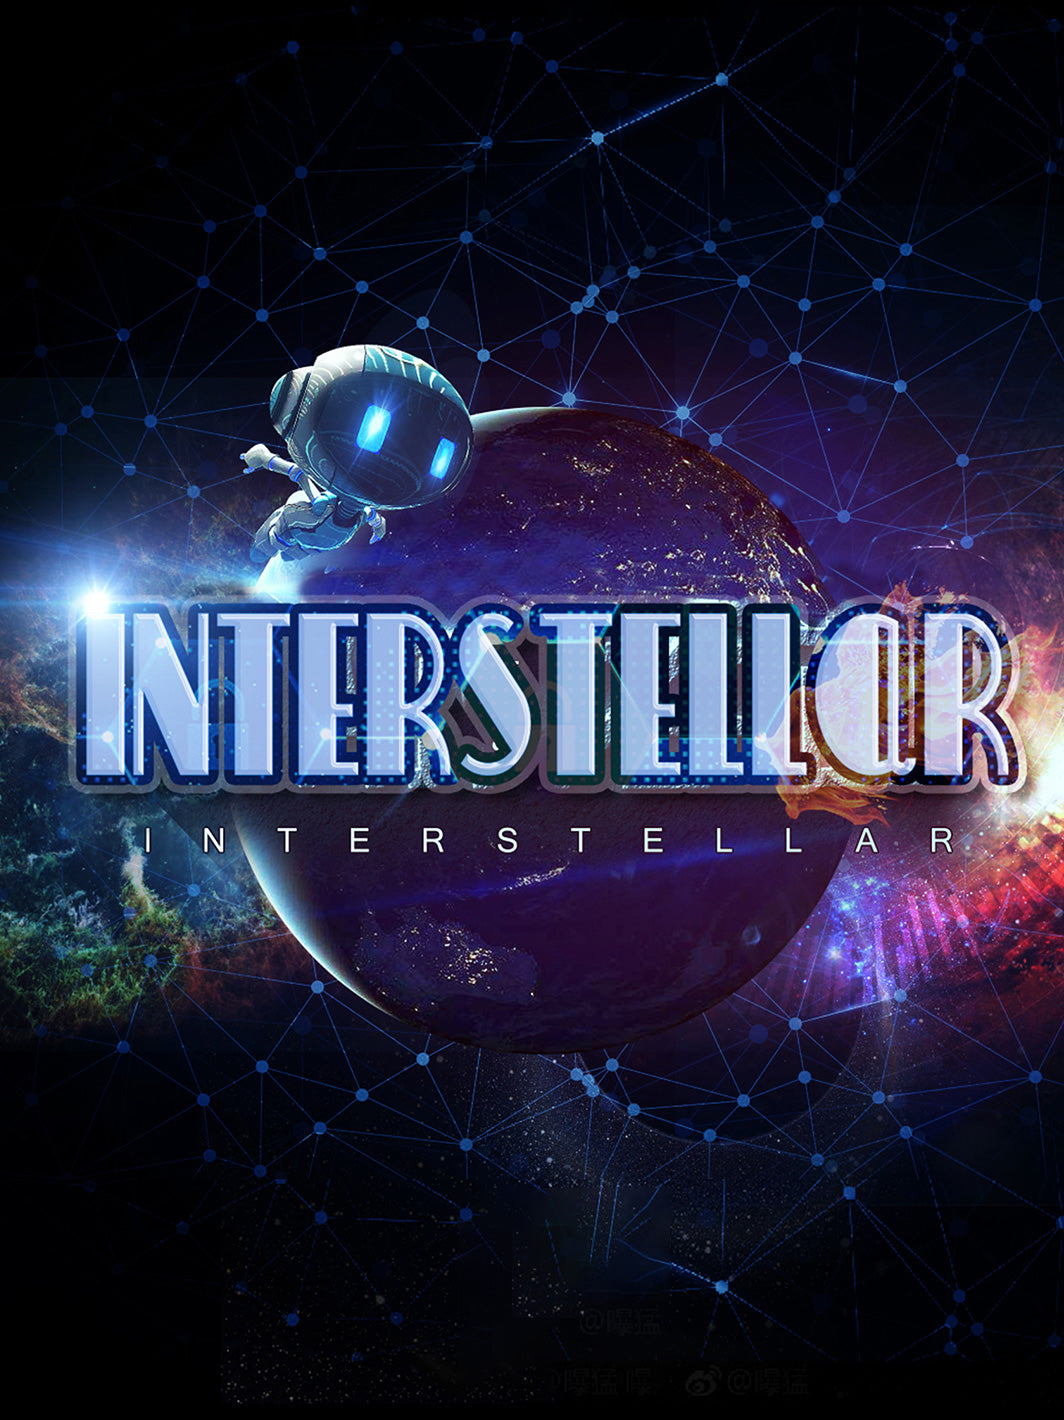 ShallxR VR games - interstellar